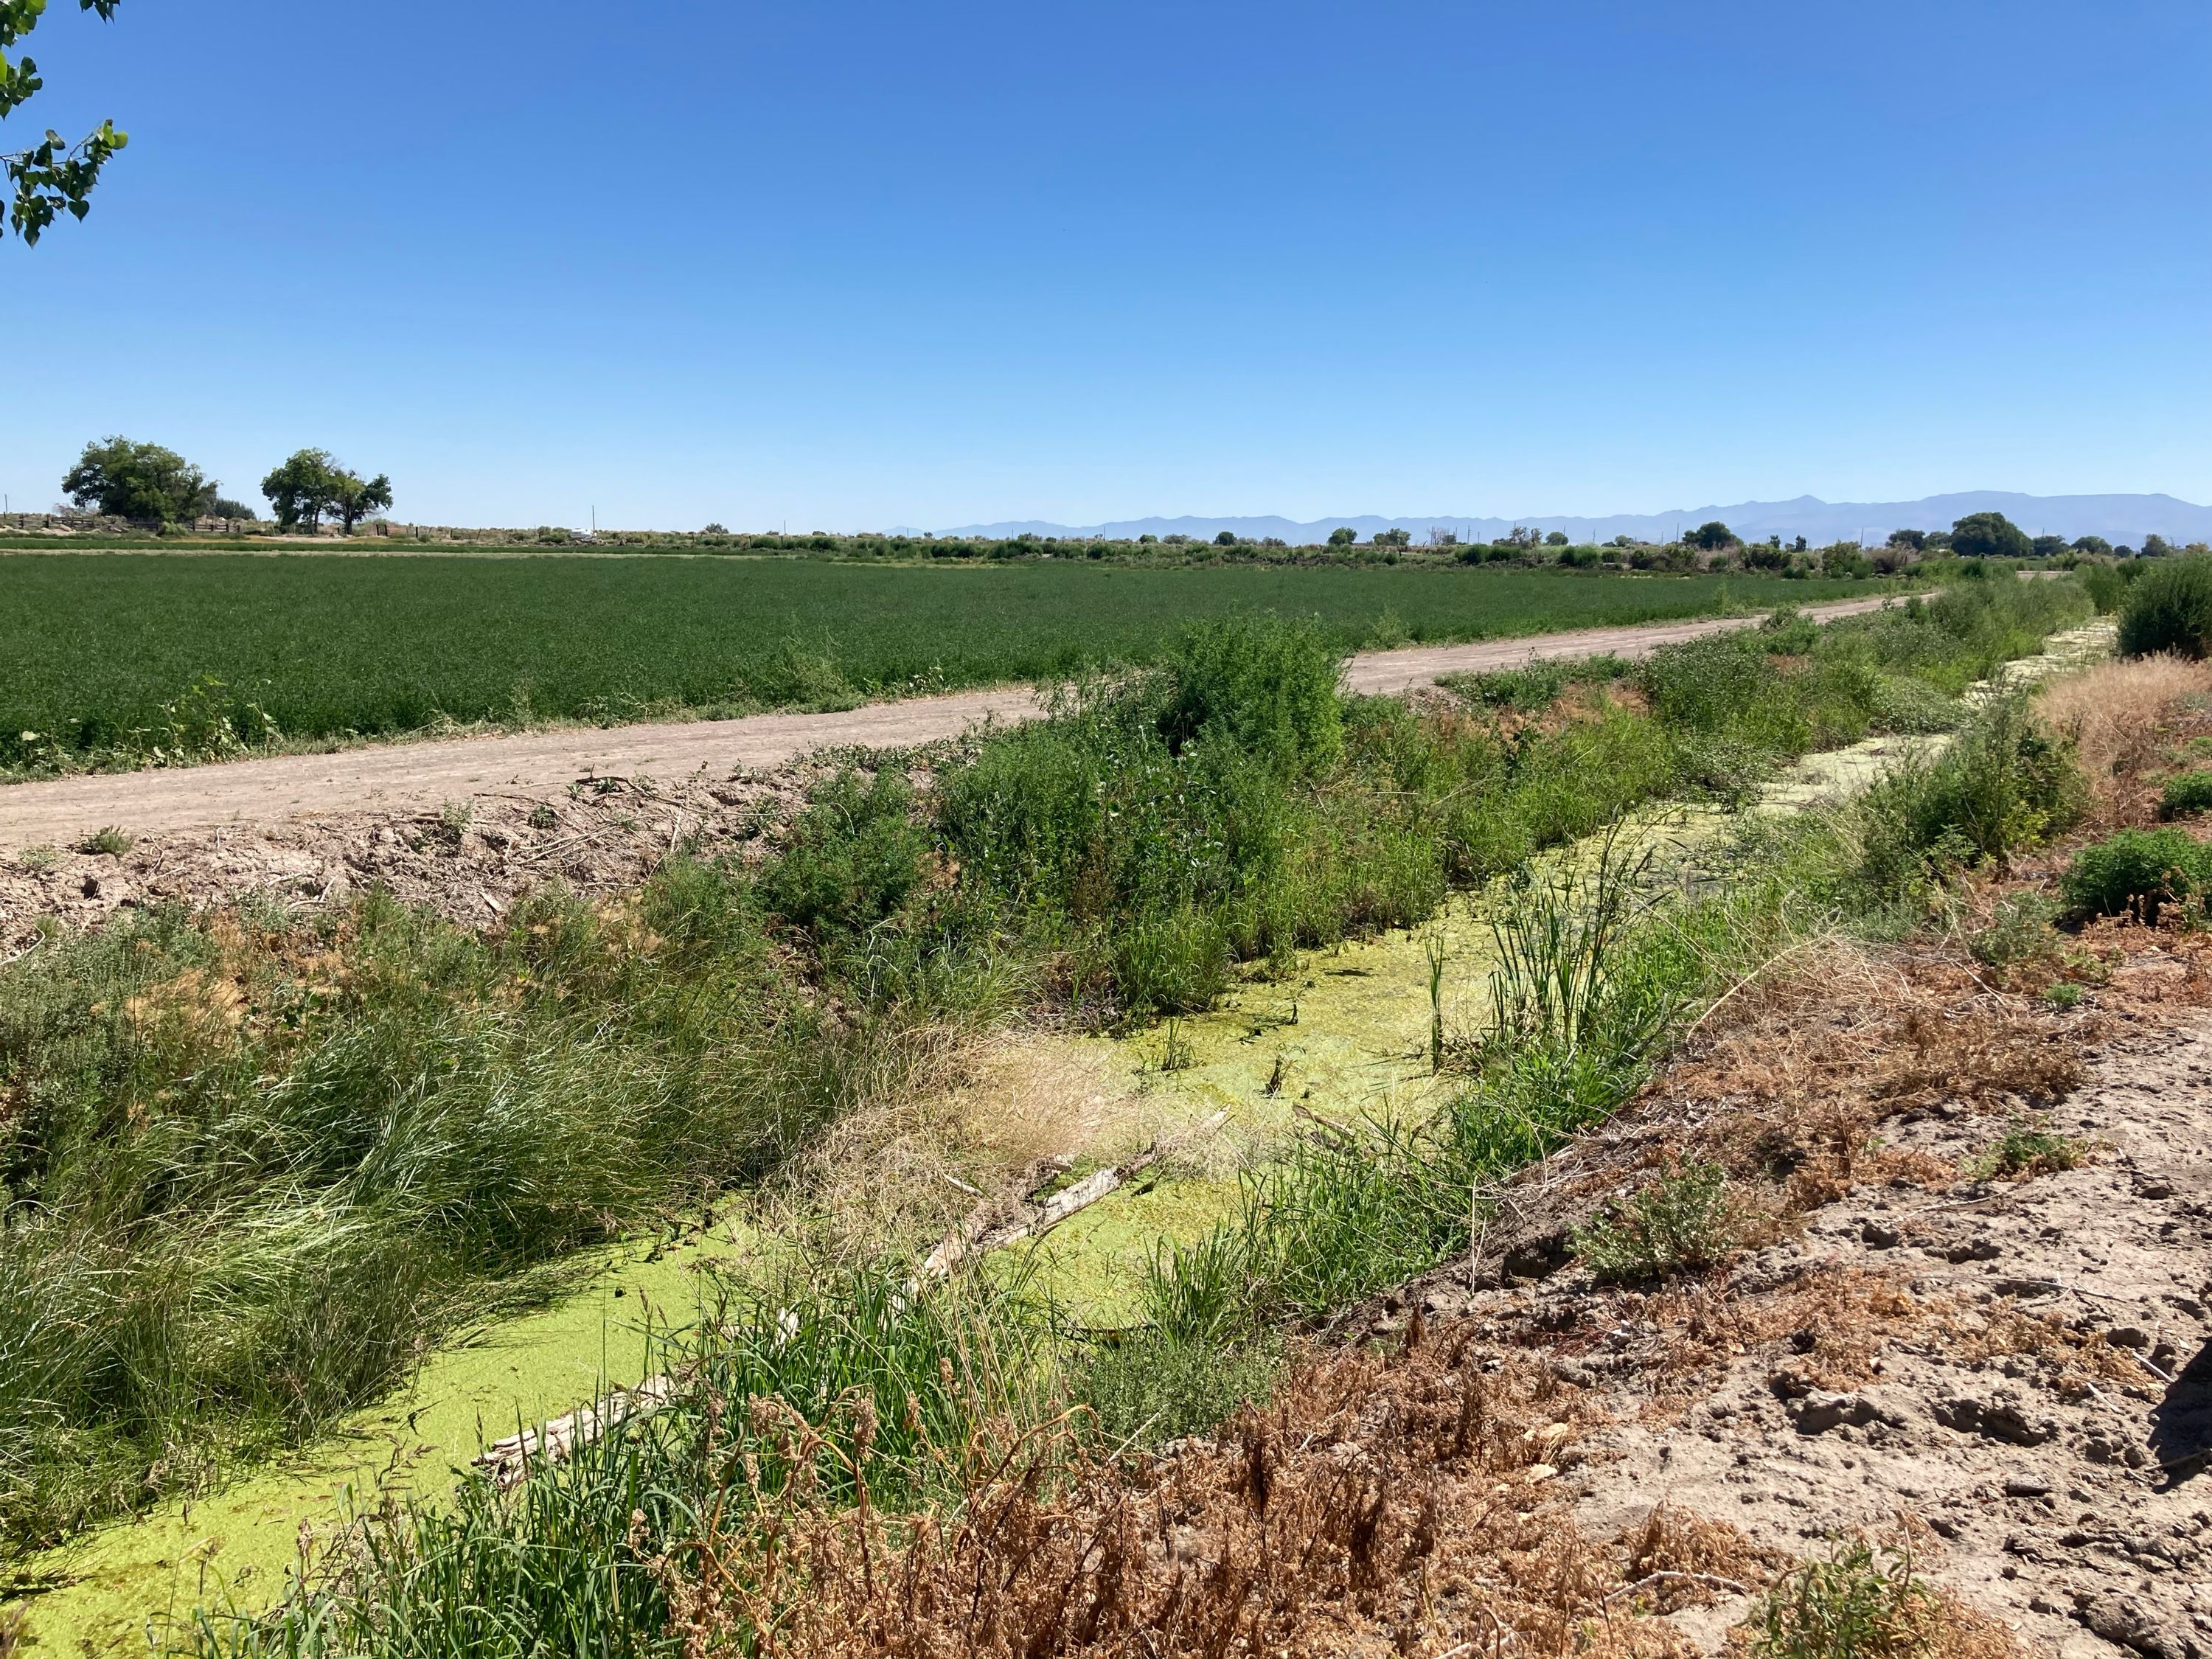 A weedy irrigation ditch